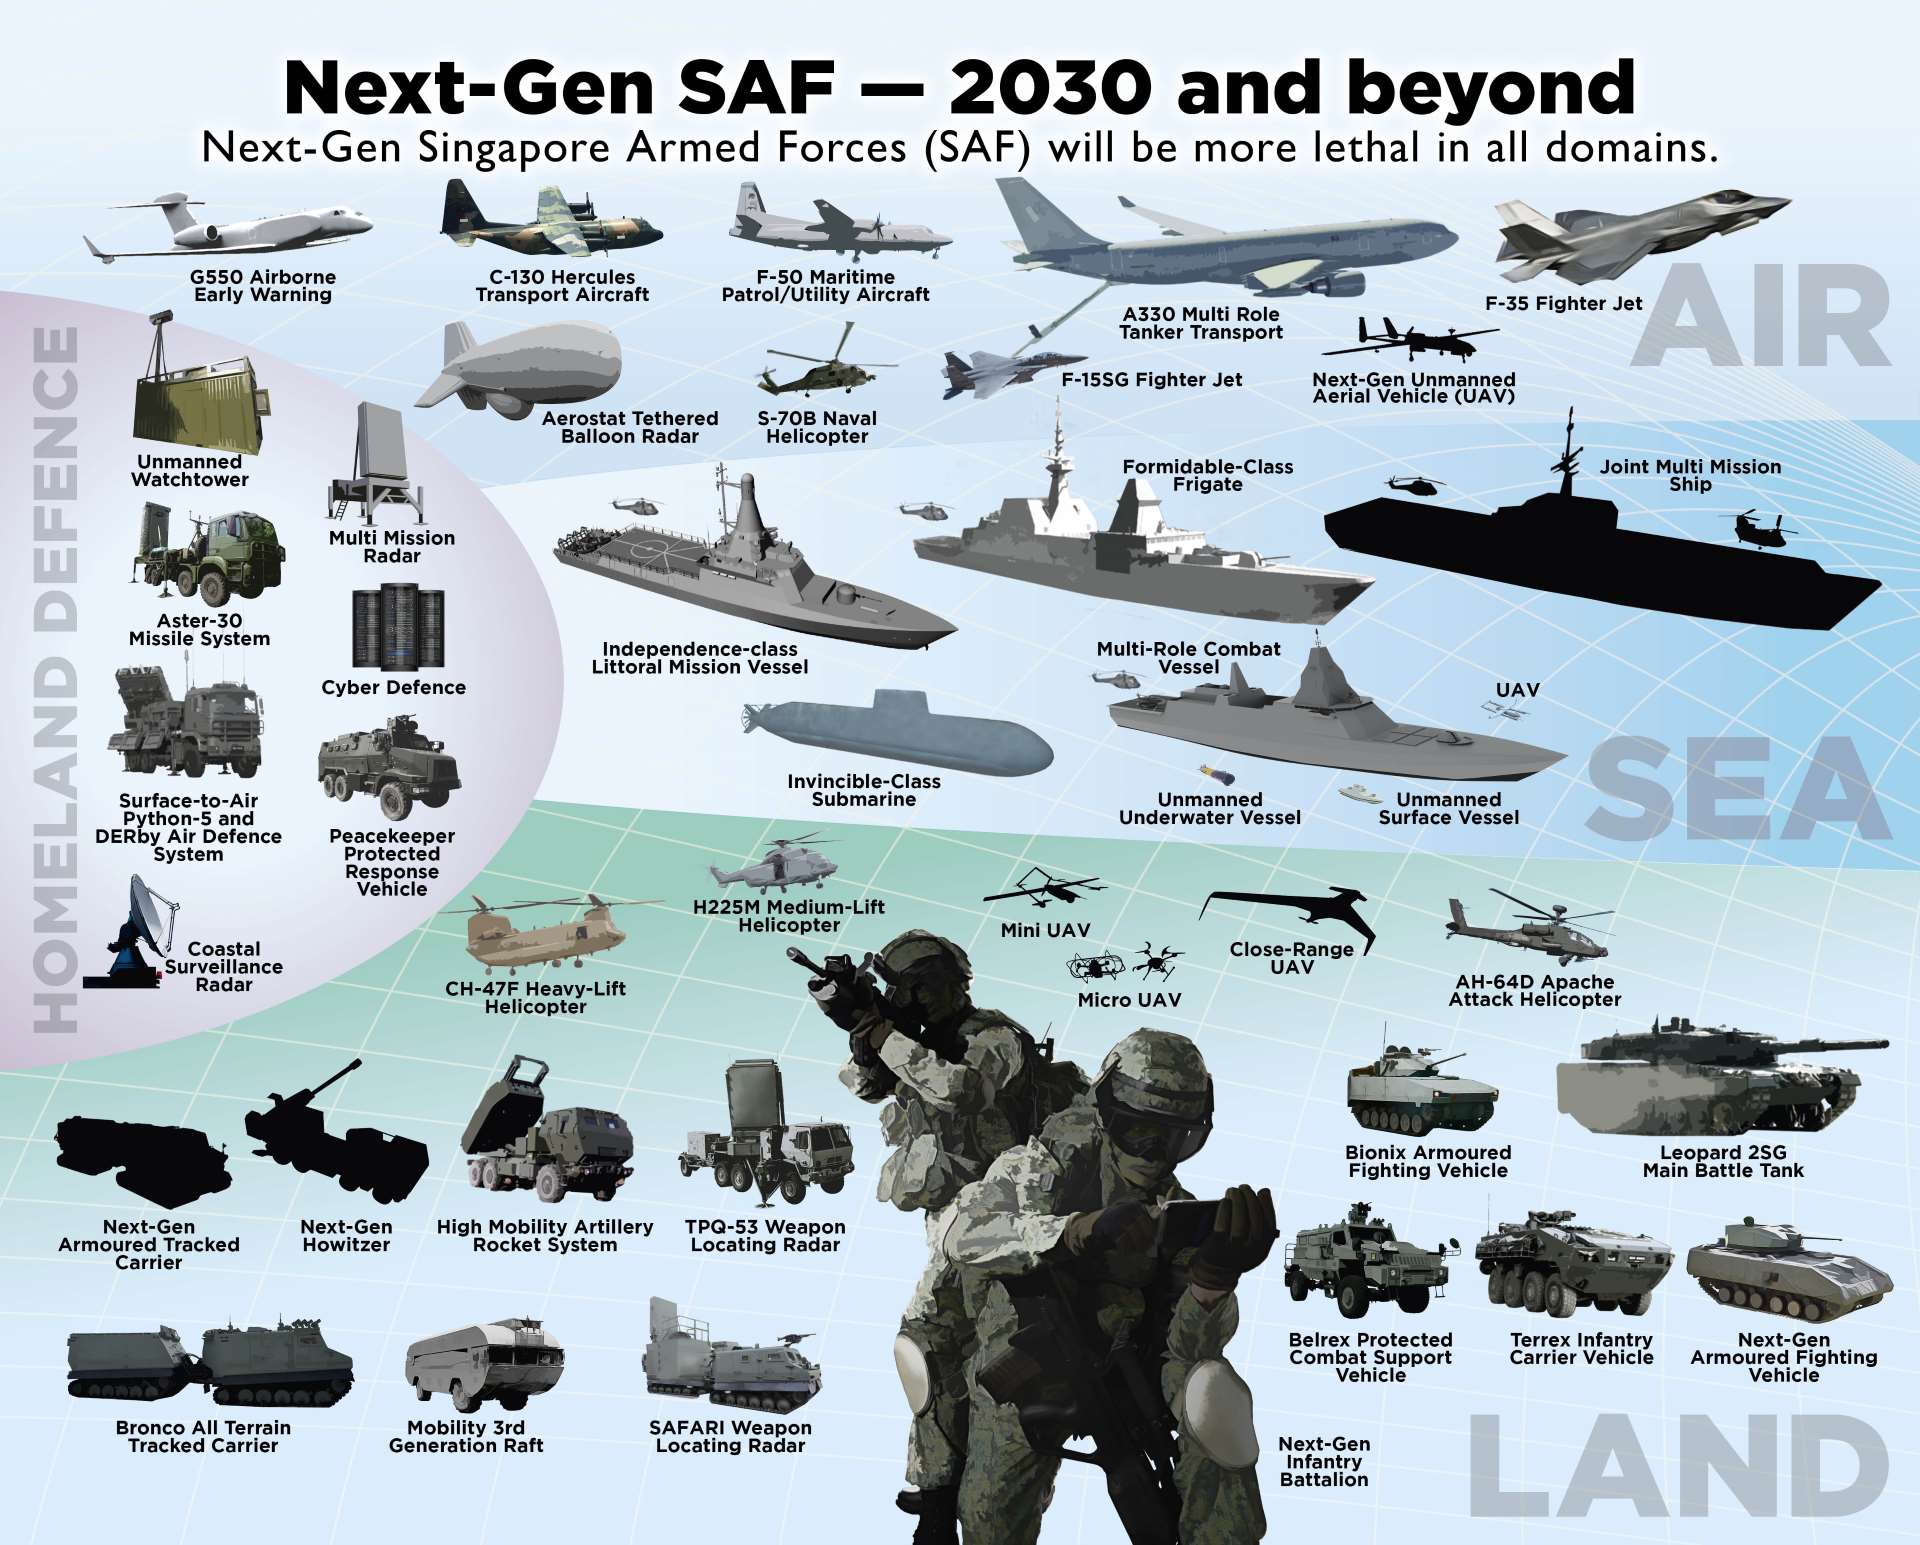 Next-Gen SAF - 2030 and Beyond